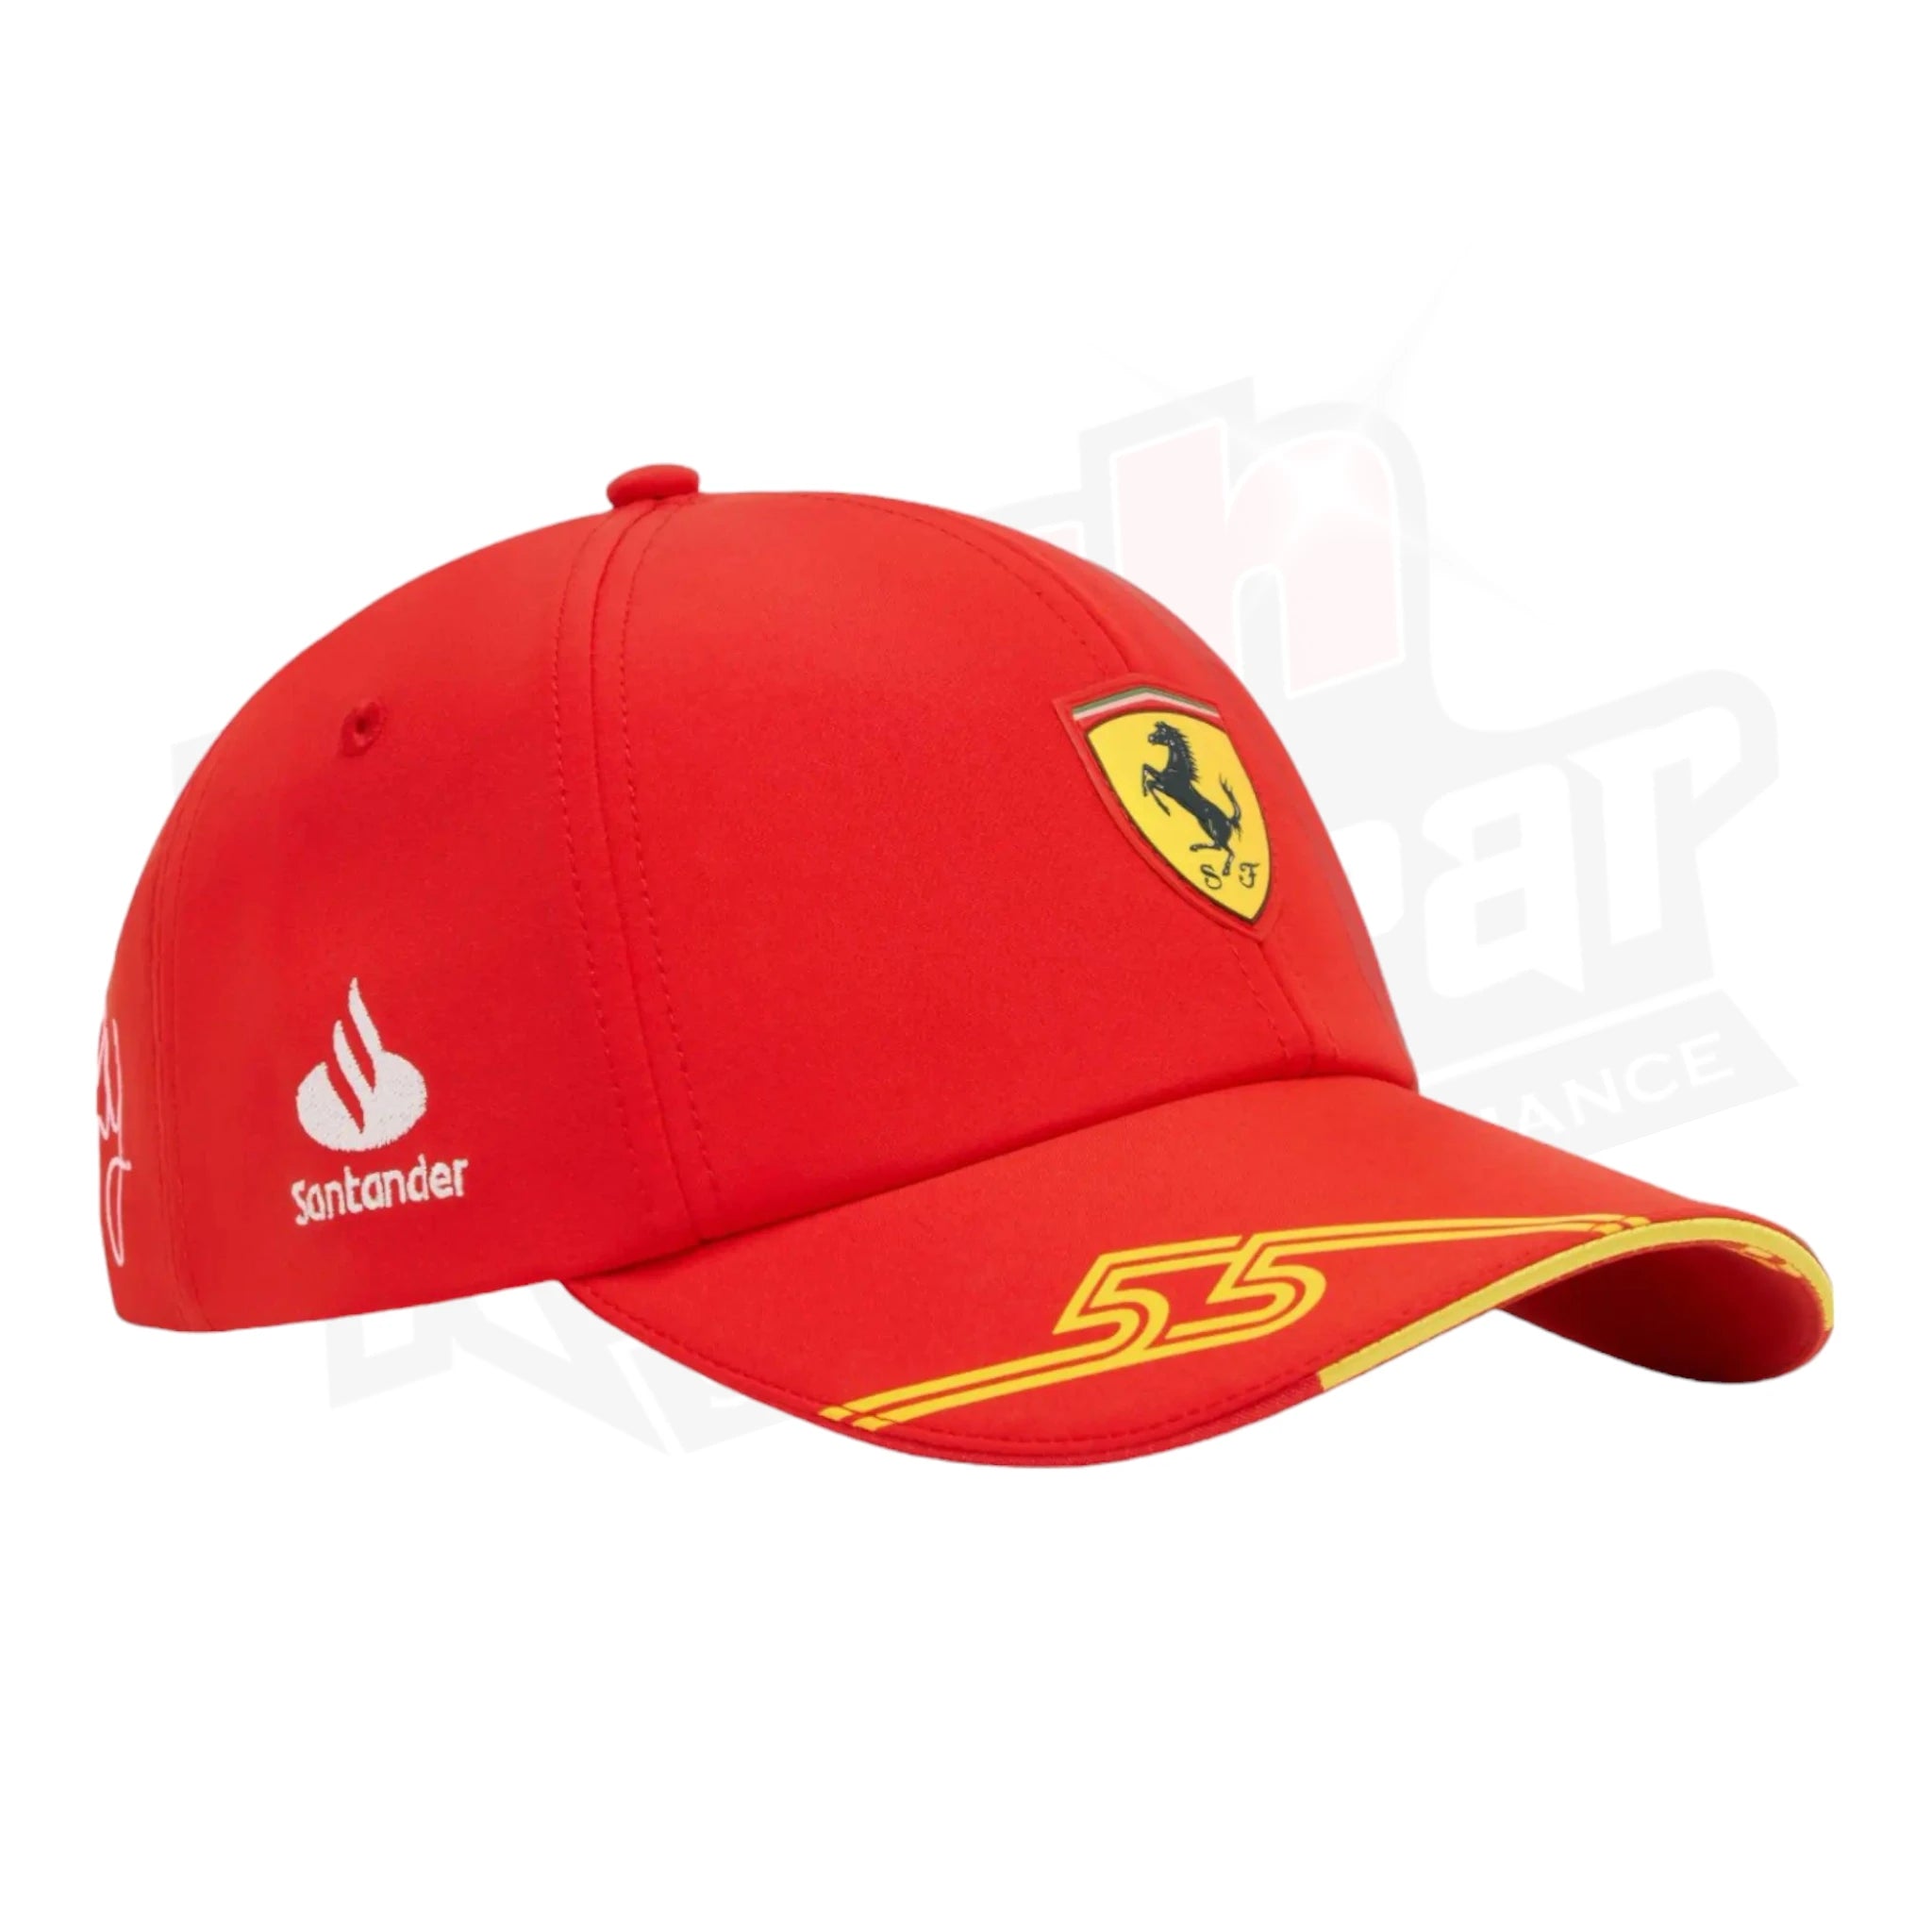 Scuderia Ferrari Team Sainz Replica hat - Barcelona Special Edition